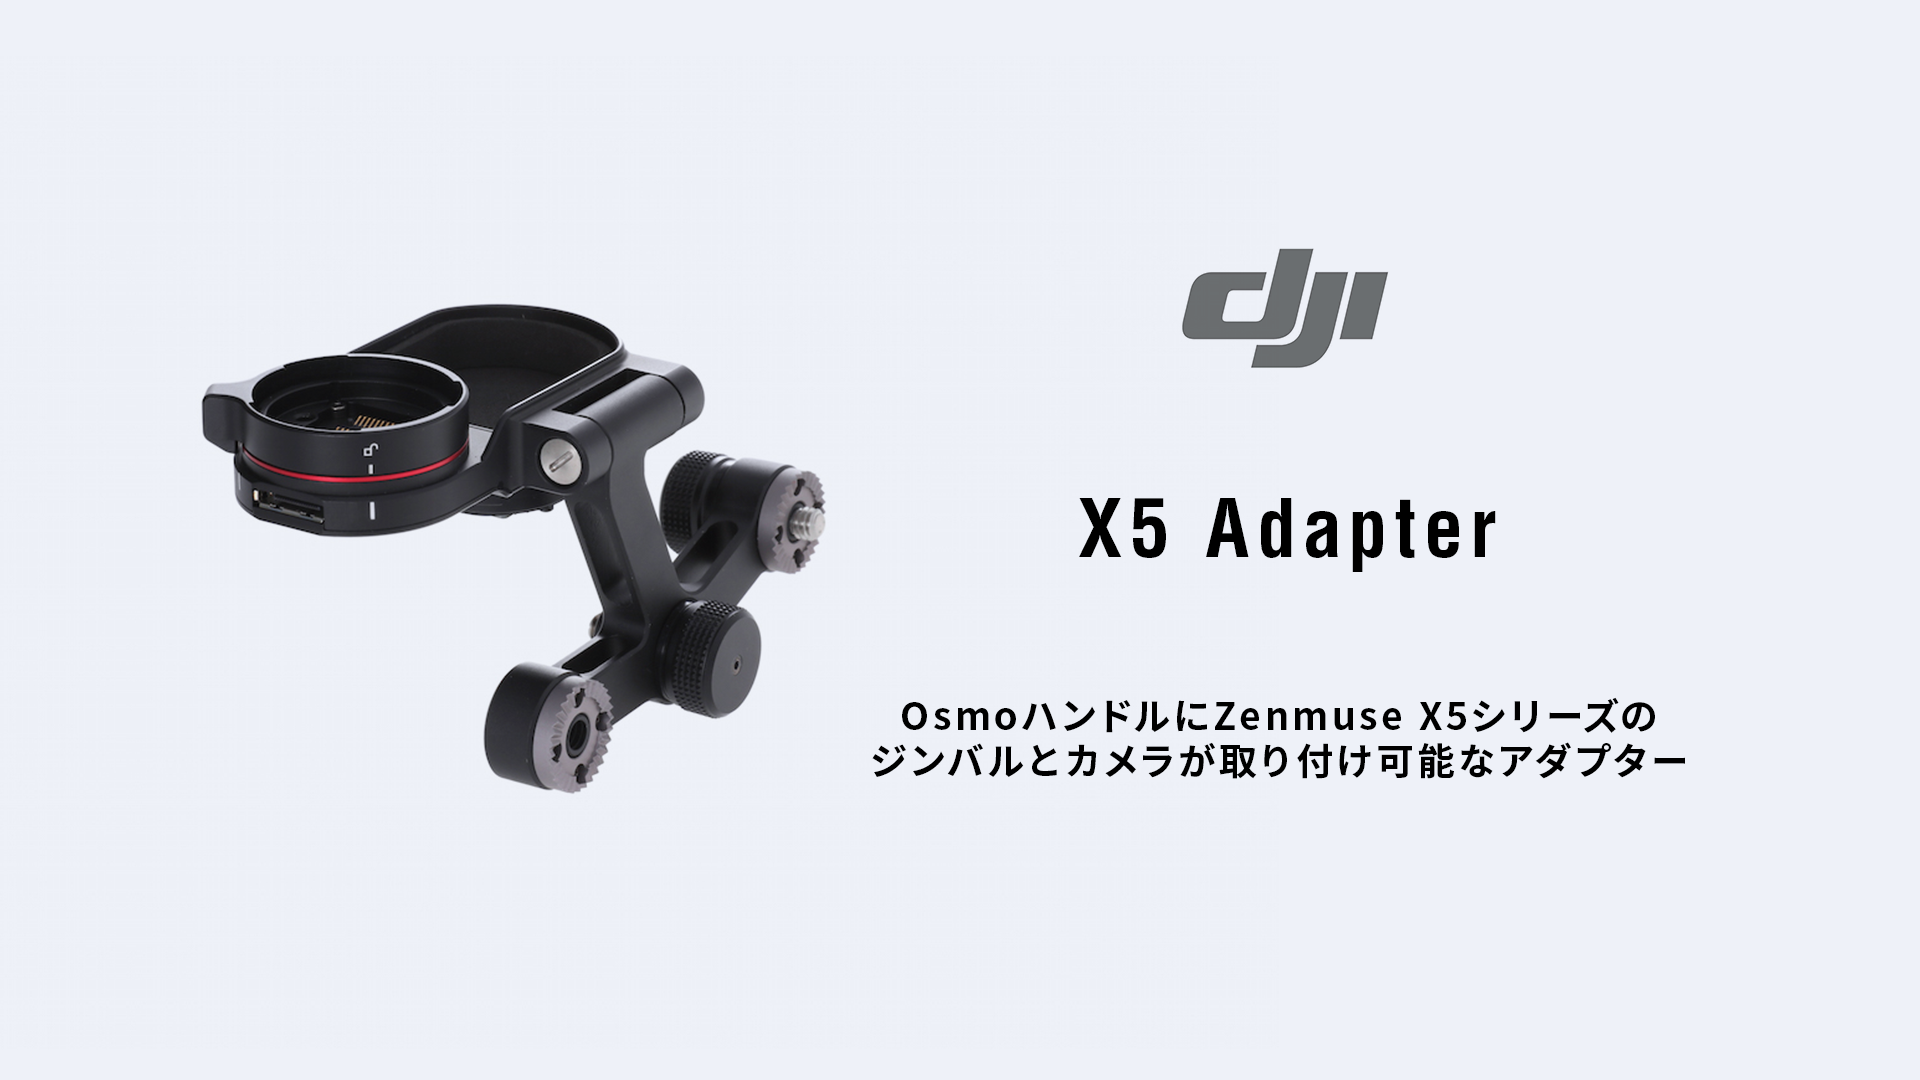 DJI DJI Adapter X5 Osmo Part 37 